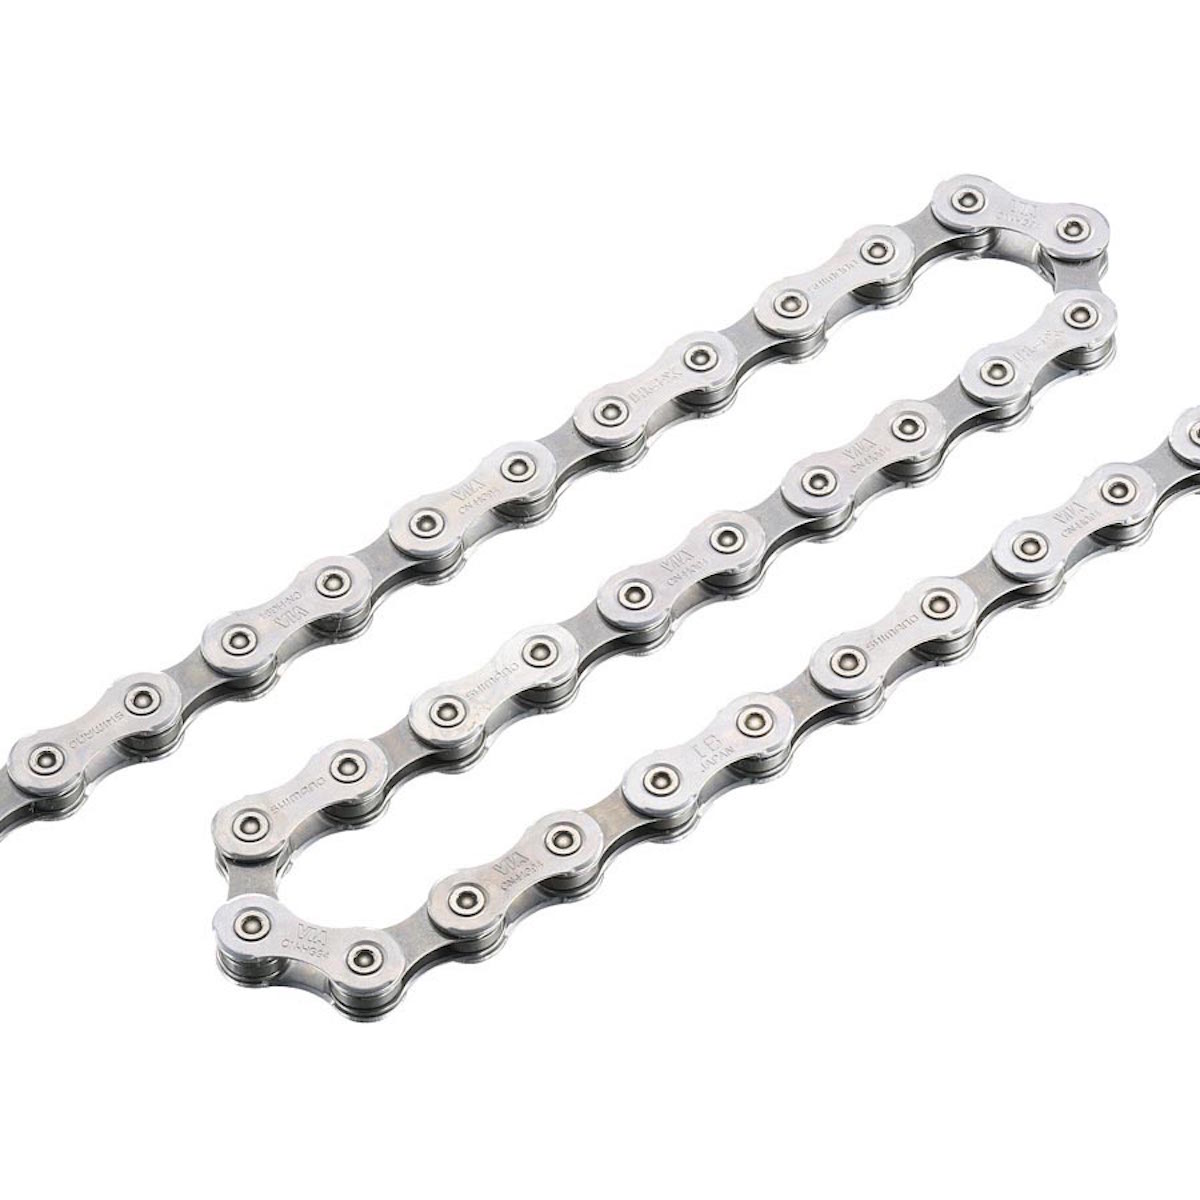 (HG54) 10 Spd Chain